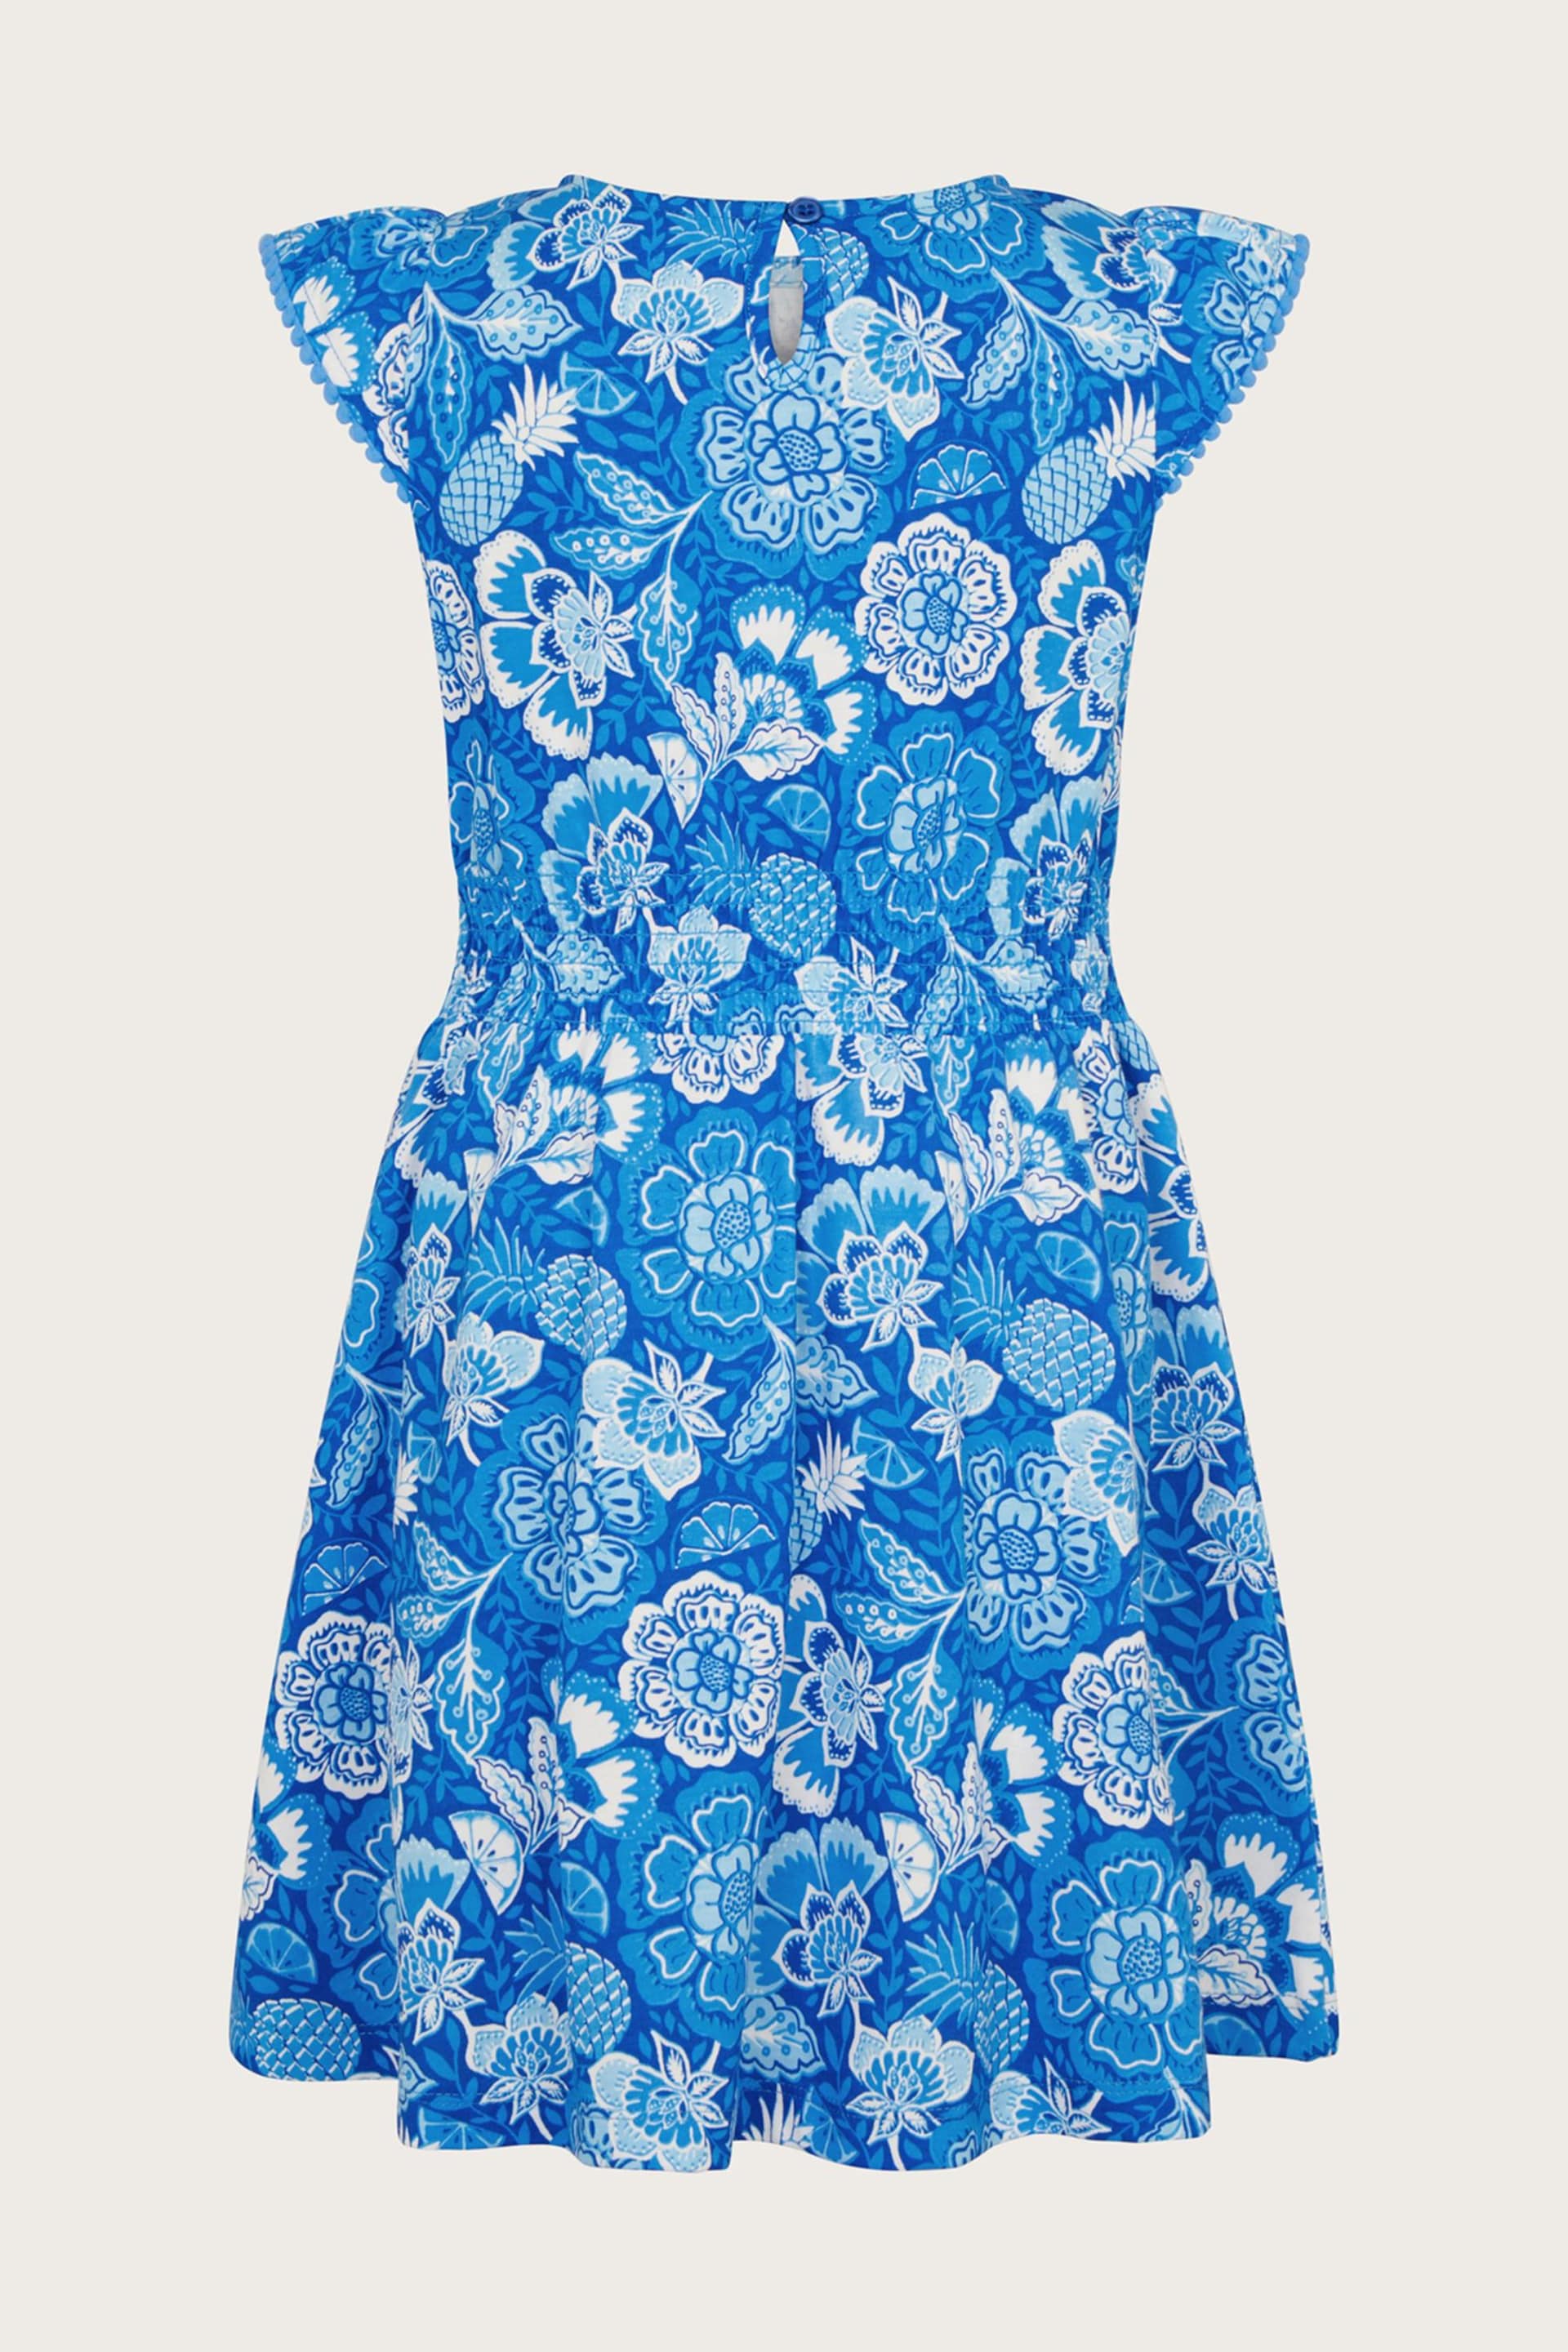 Monsoon Blue Heritage Fruit Print Dress - Image 3 of 4